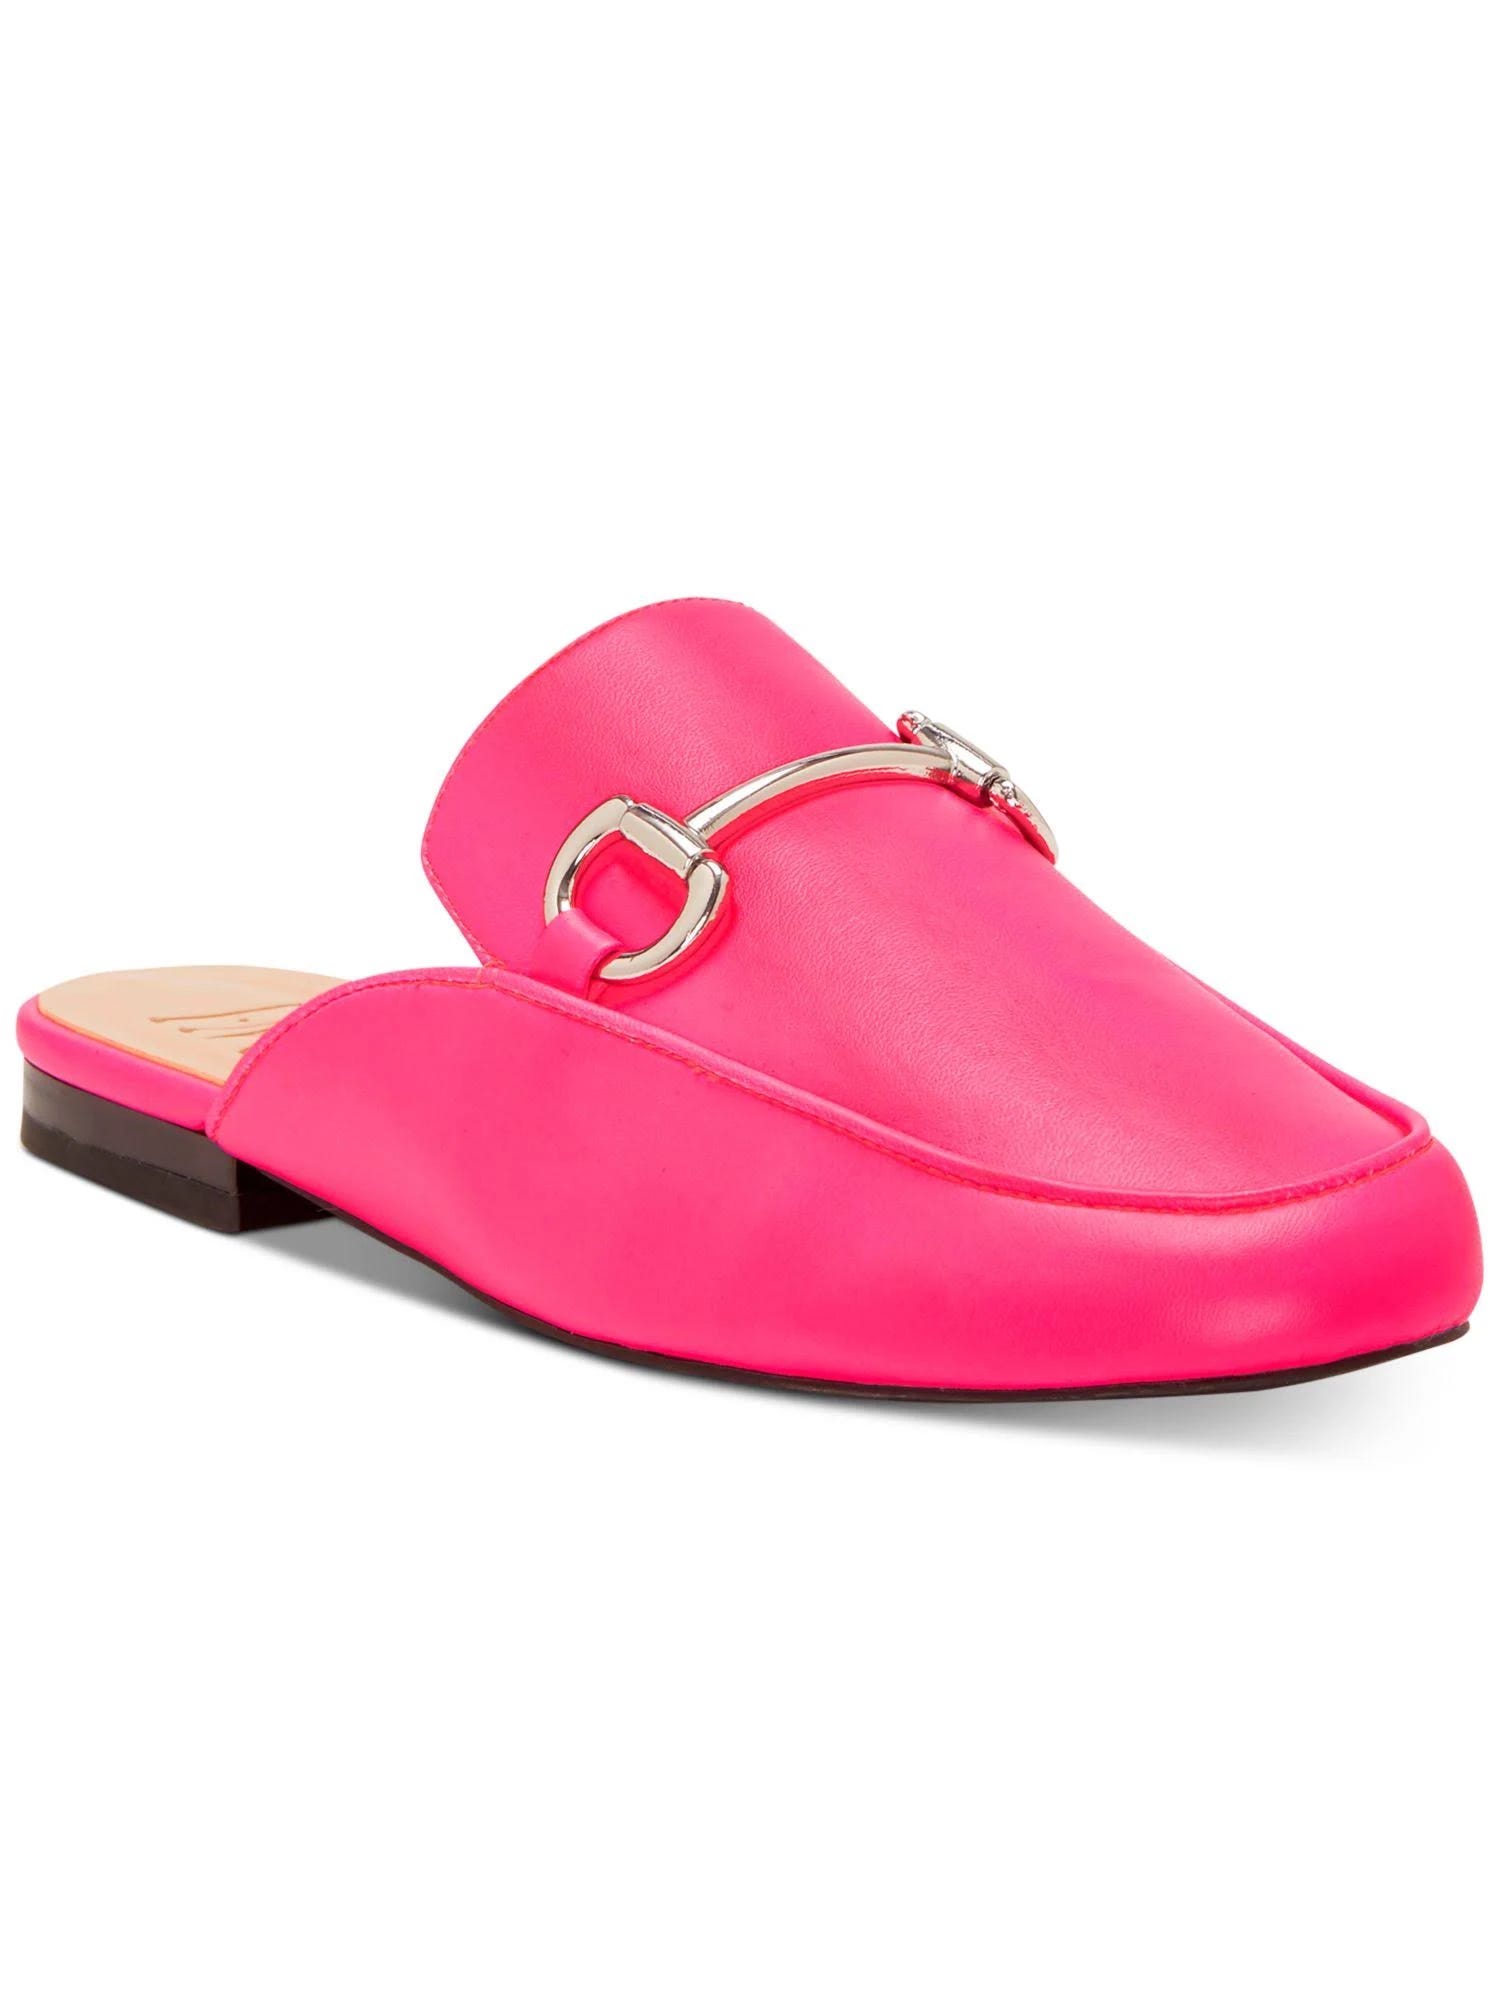 Stylish Hot Pink Women's Slip On Mules | Image